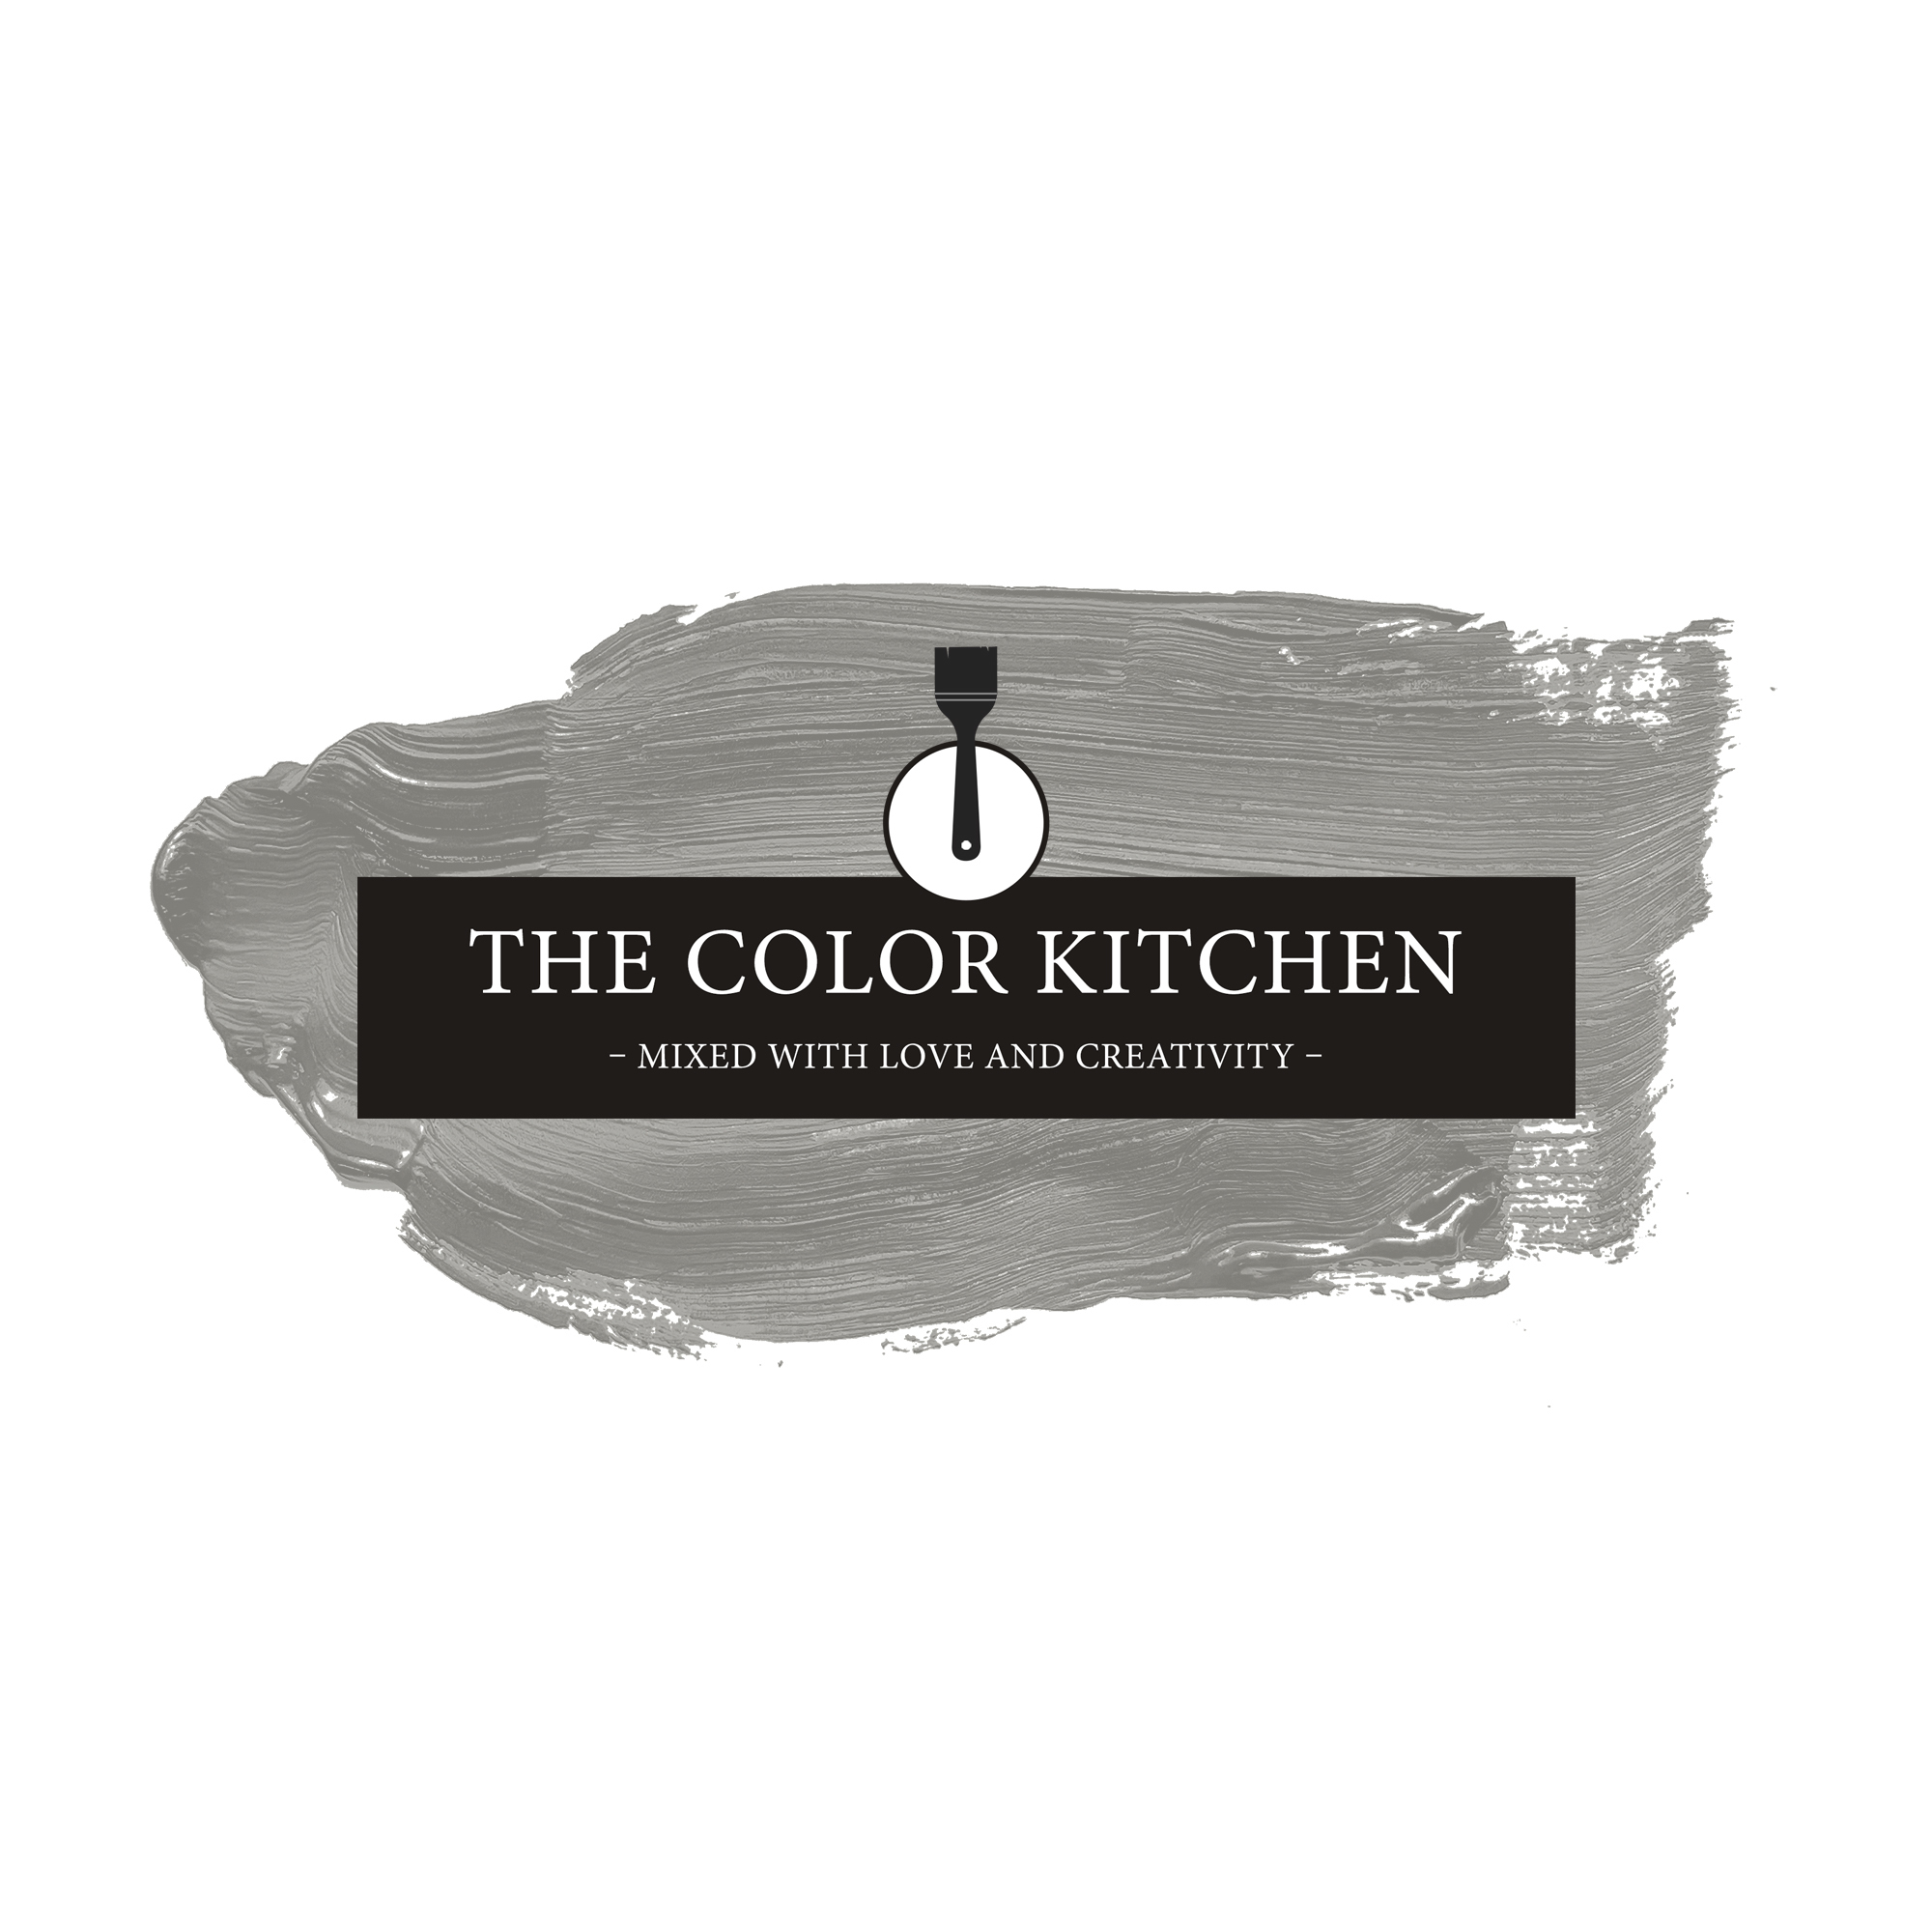 The Color Kitchen Grey Salt 2,5 l